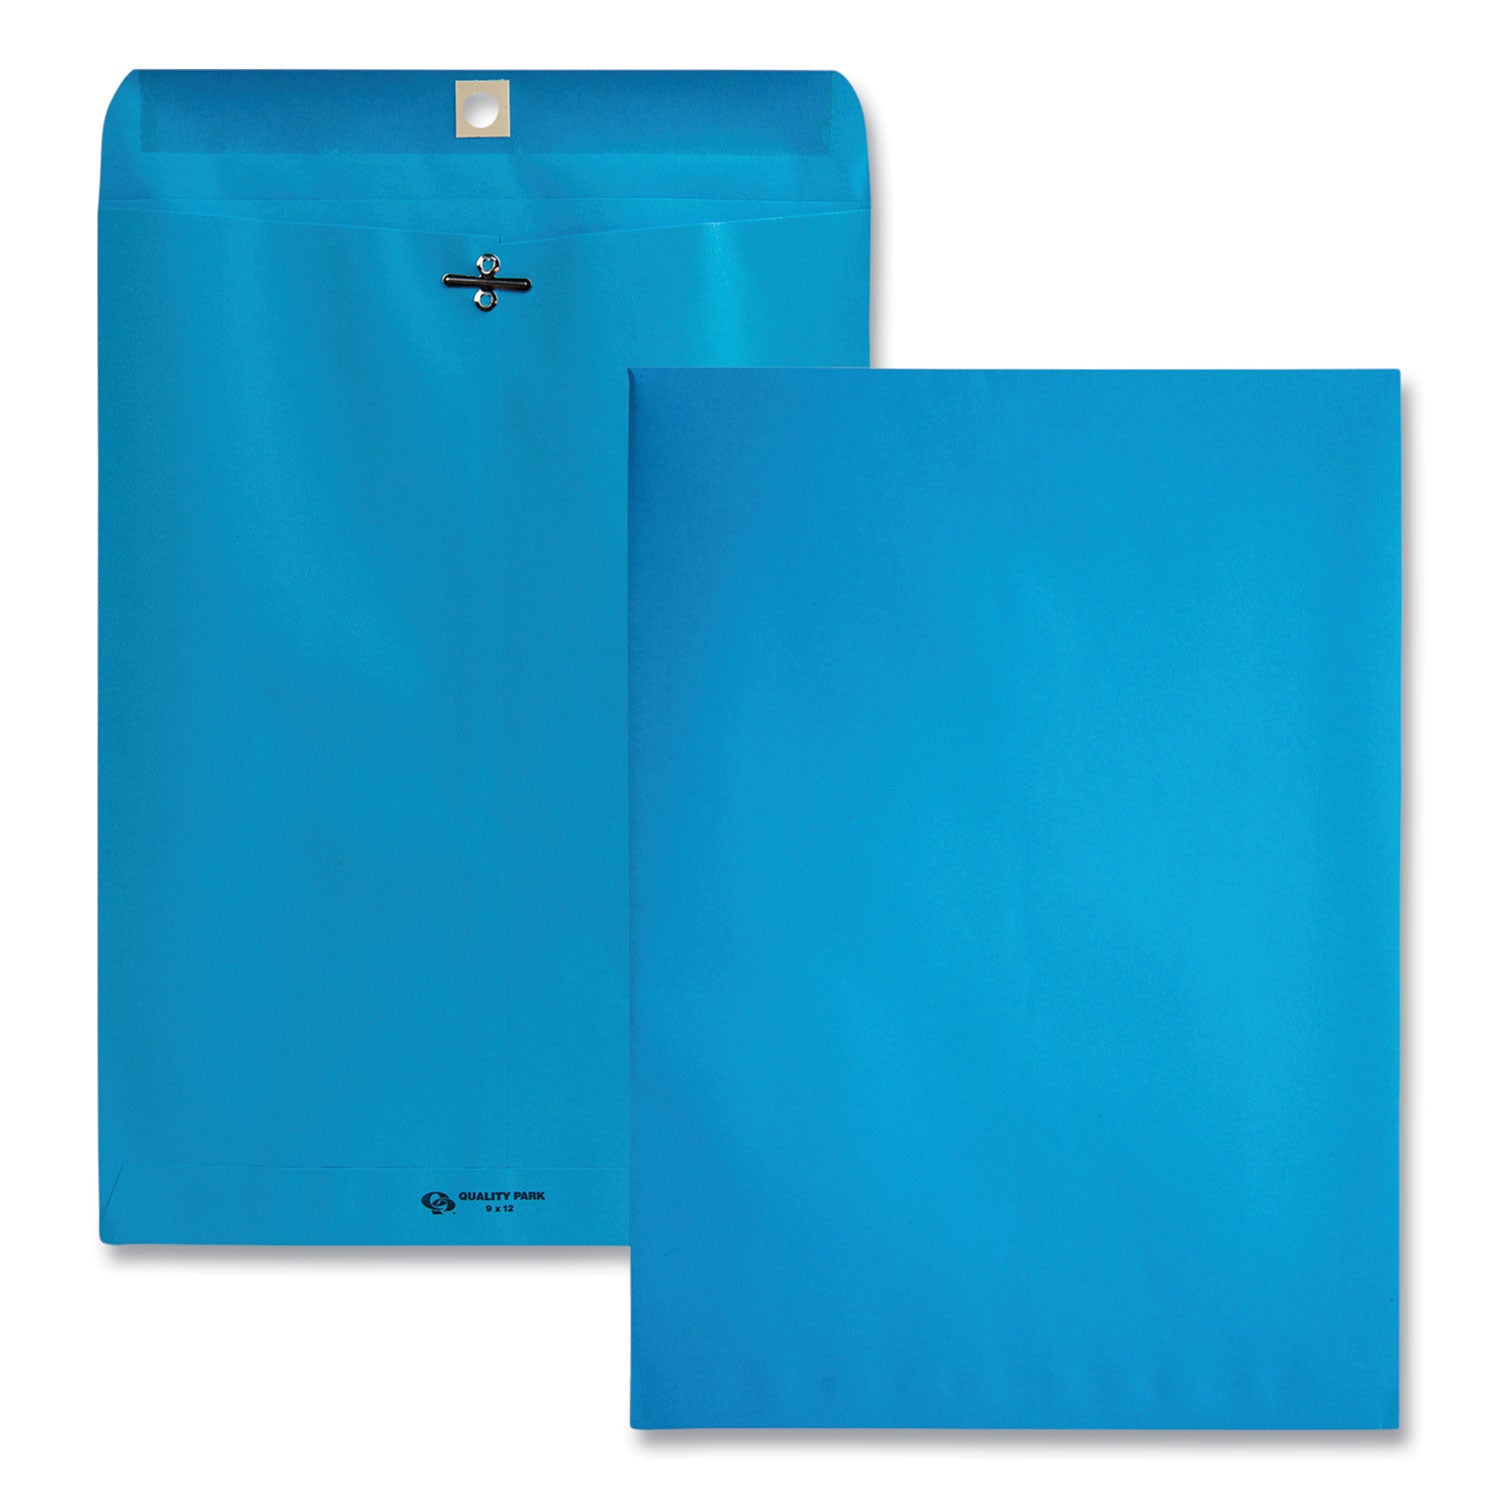 Clasp Envelope, 28 lb Bond Weight Kraft, #90, Square Flap, Clasp/Gummed Closure, 9 x 12, Blue, 10/Pack - 